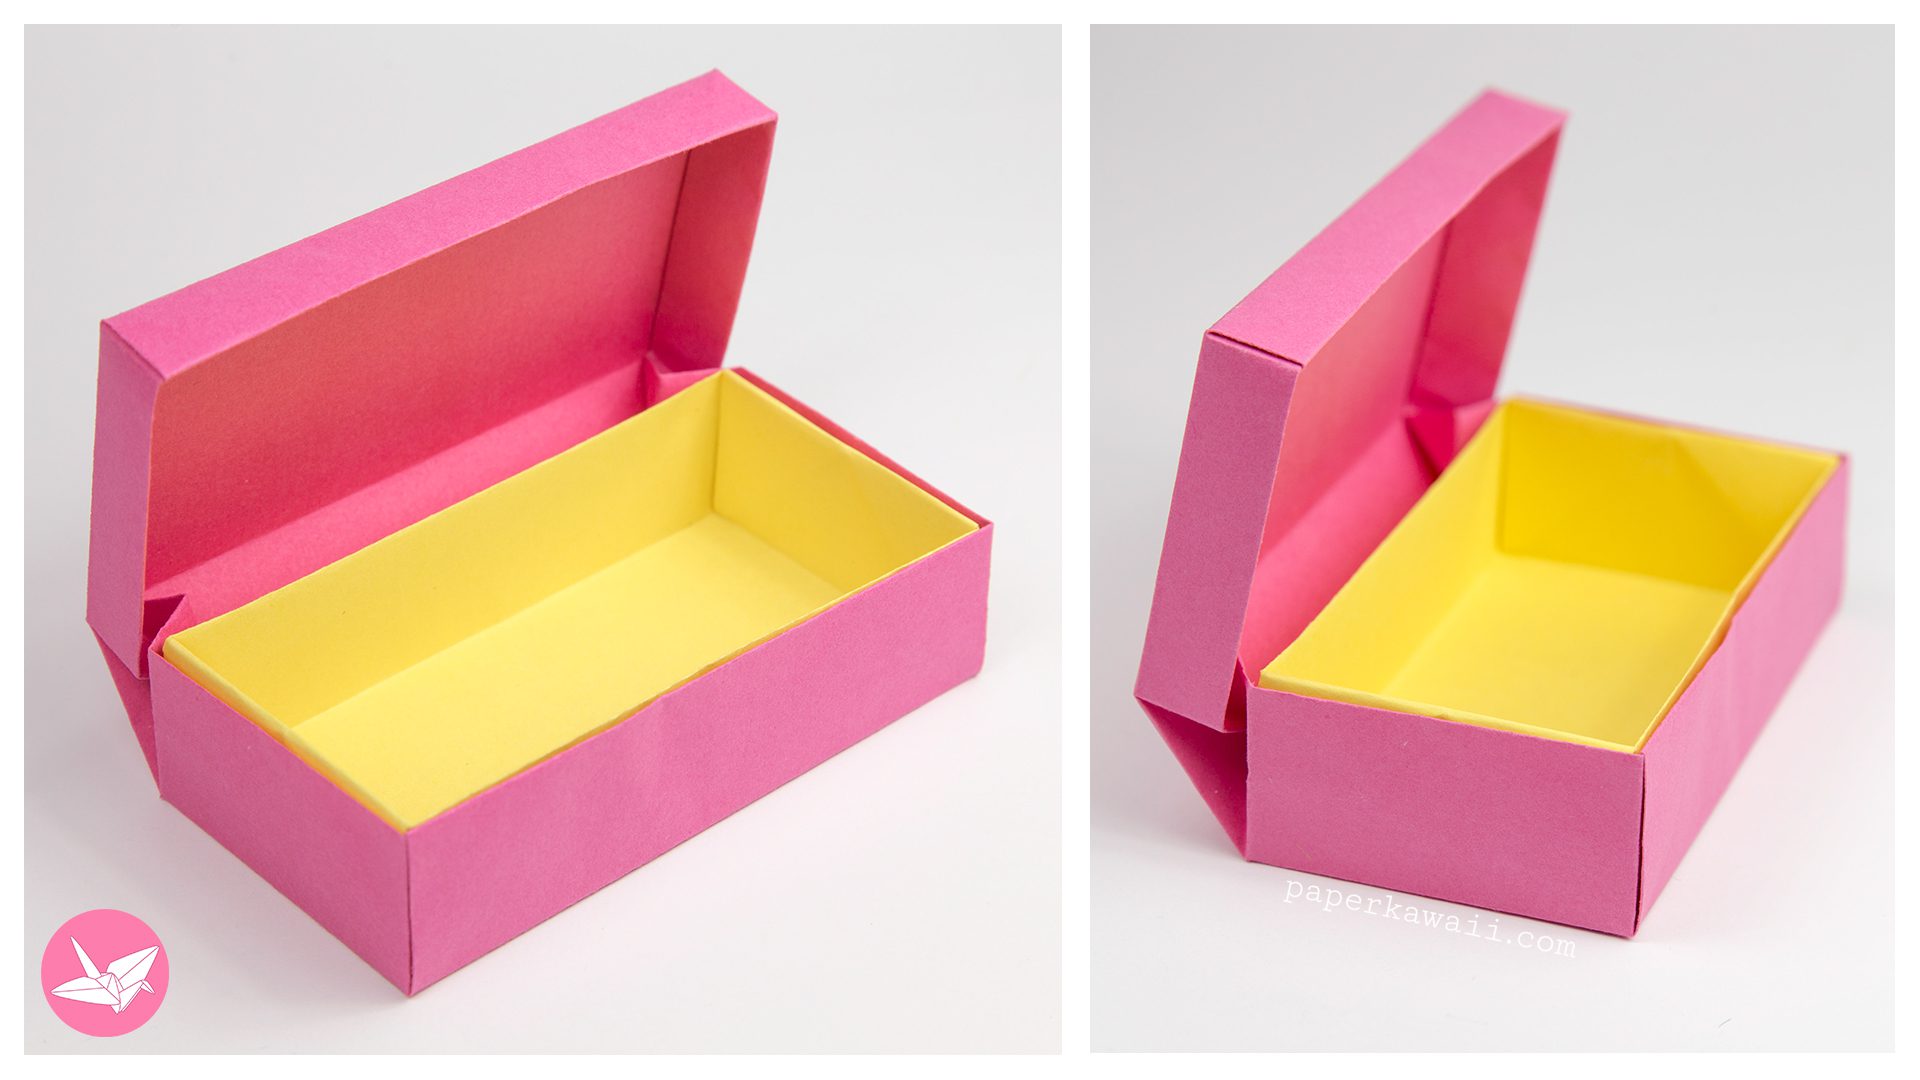 Challenge to Kamiya Flow Creative Origami - Treasure Box of Creative Ideas